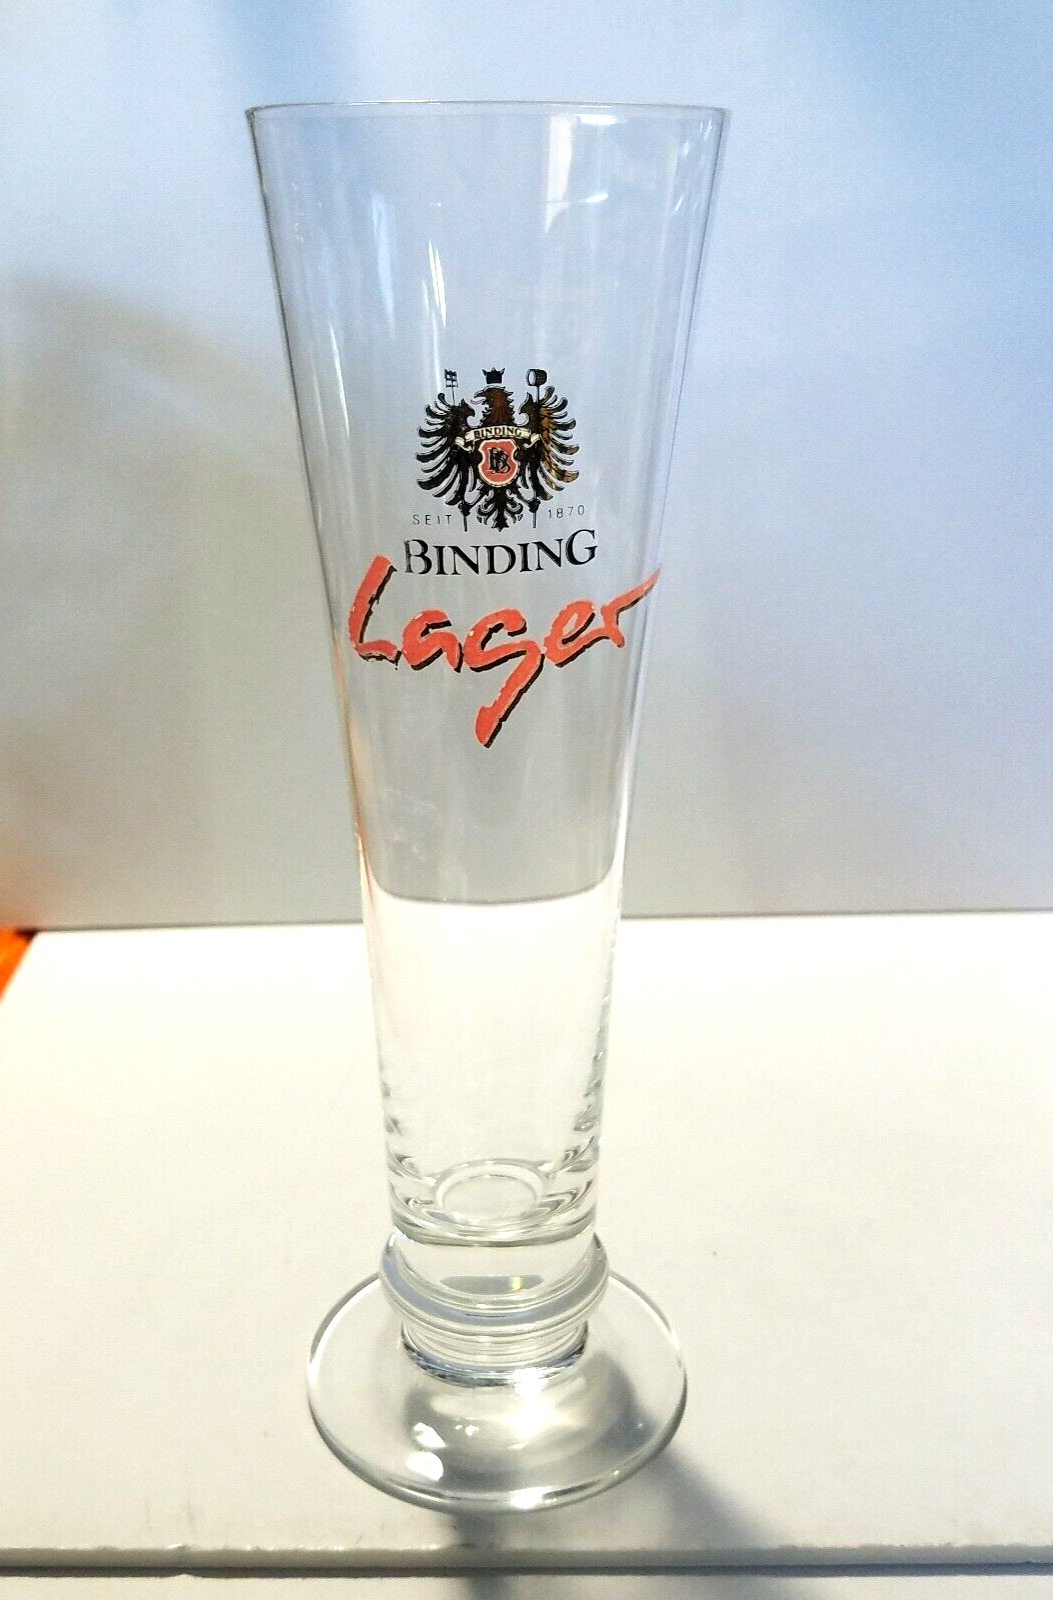 Binding Lager Bier Seit 1870 .2 Liter Glass Pilsner Style